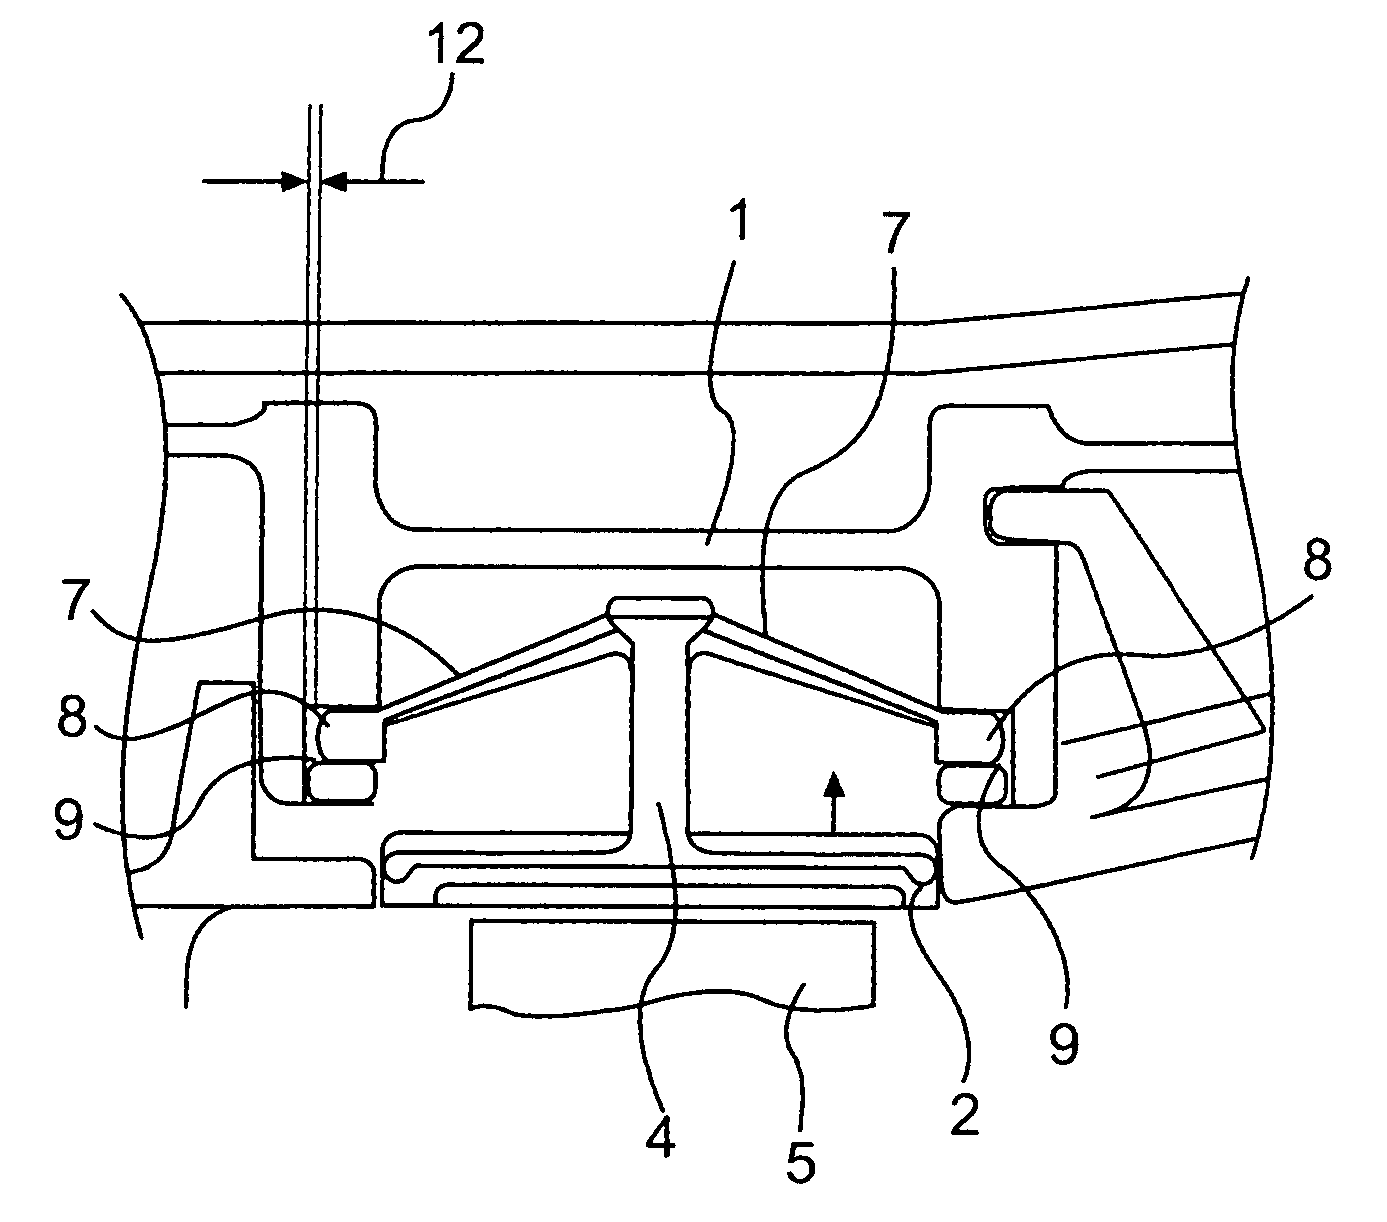 Turbine shroud segment attachment